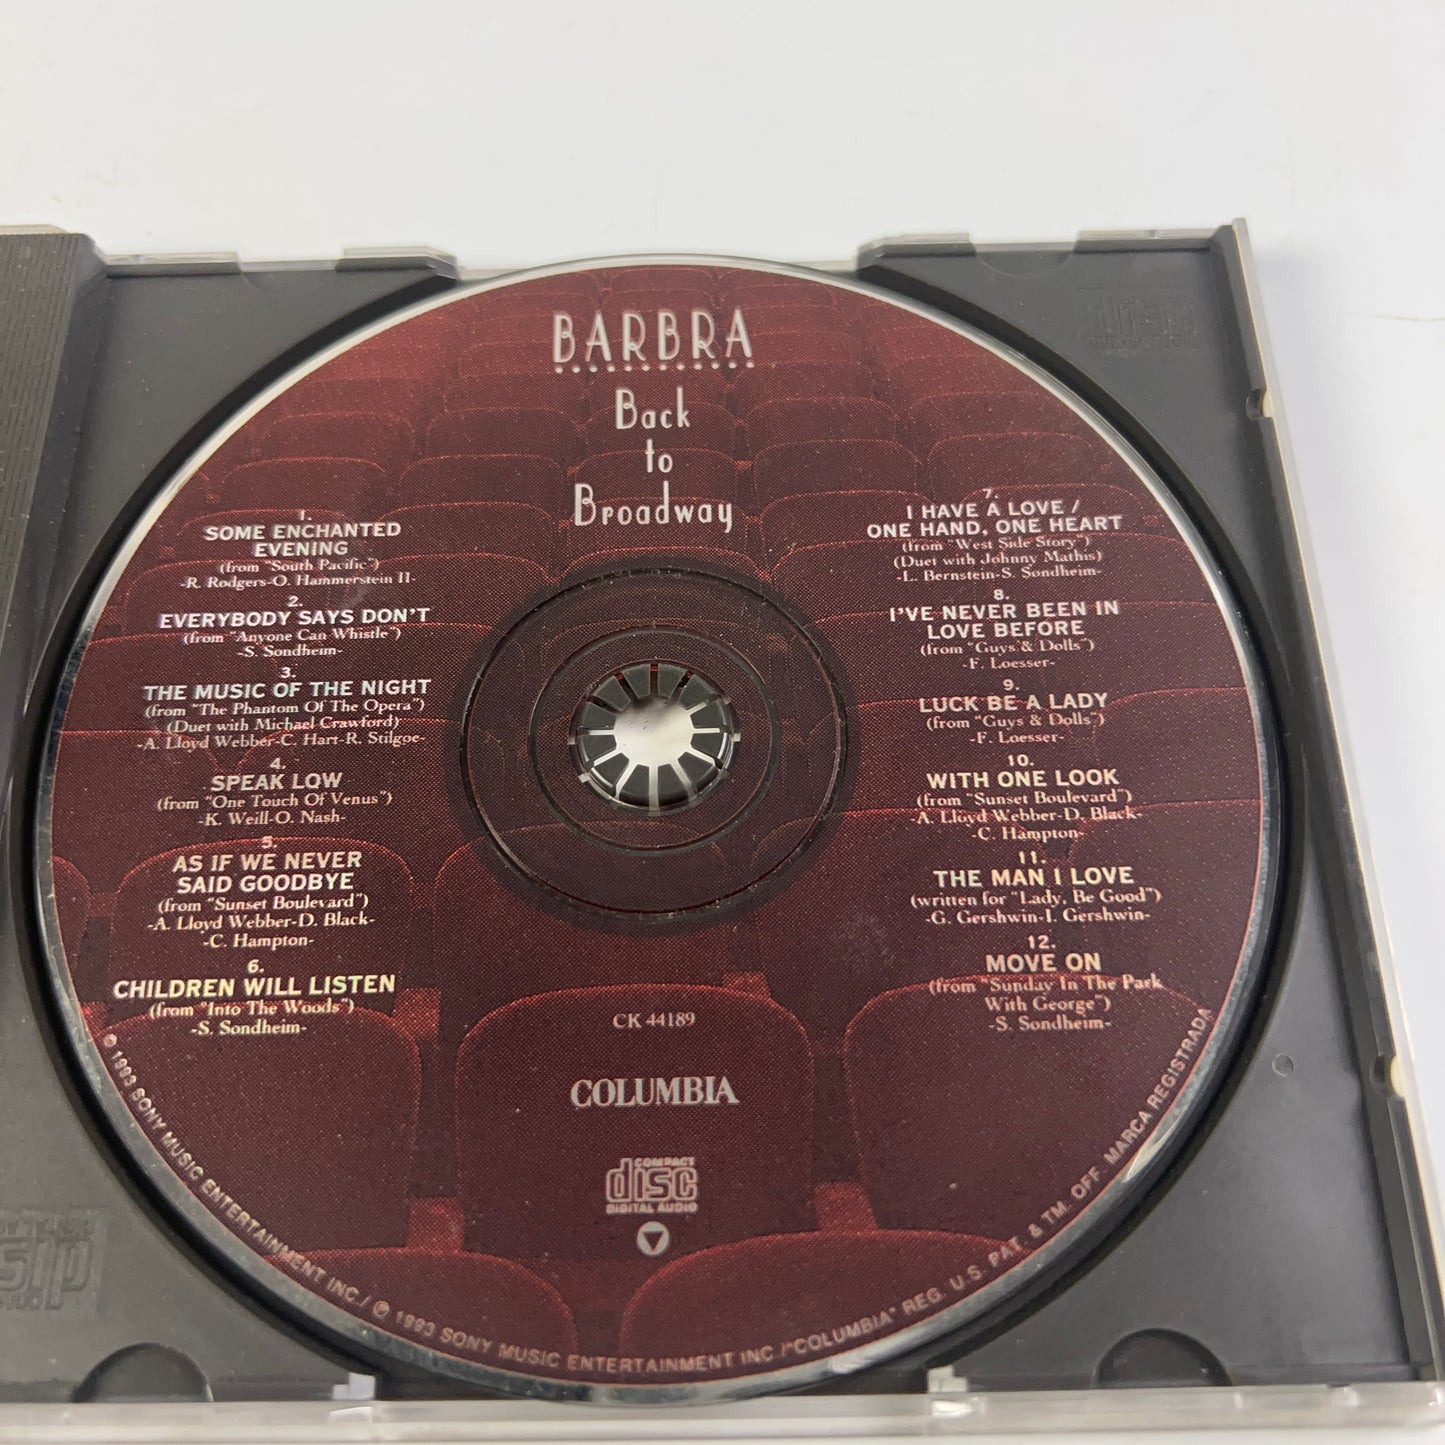 Barbra Streisand - Back to Broadway - CD, 1993, Columbia